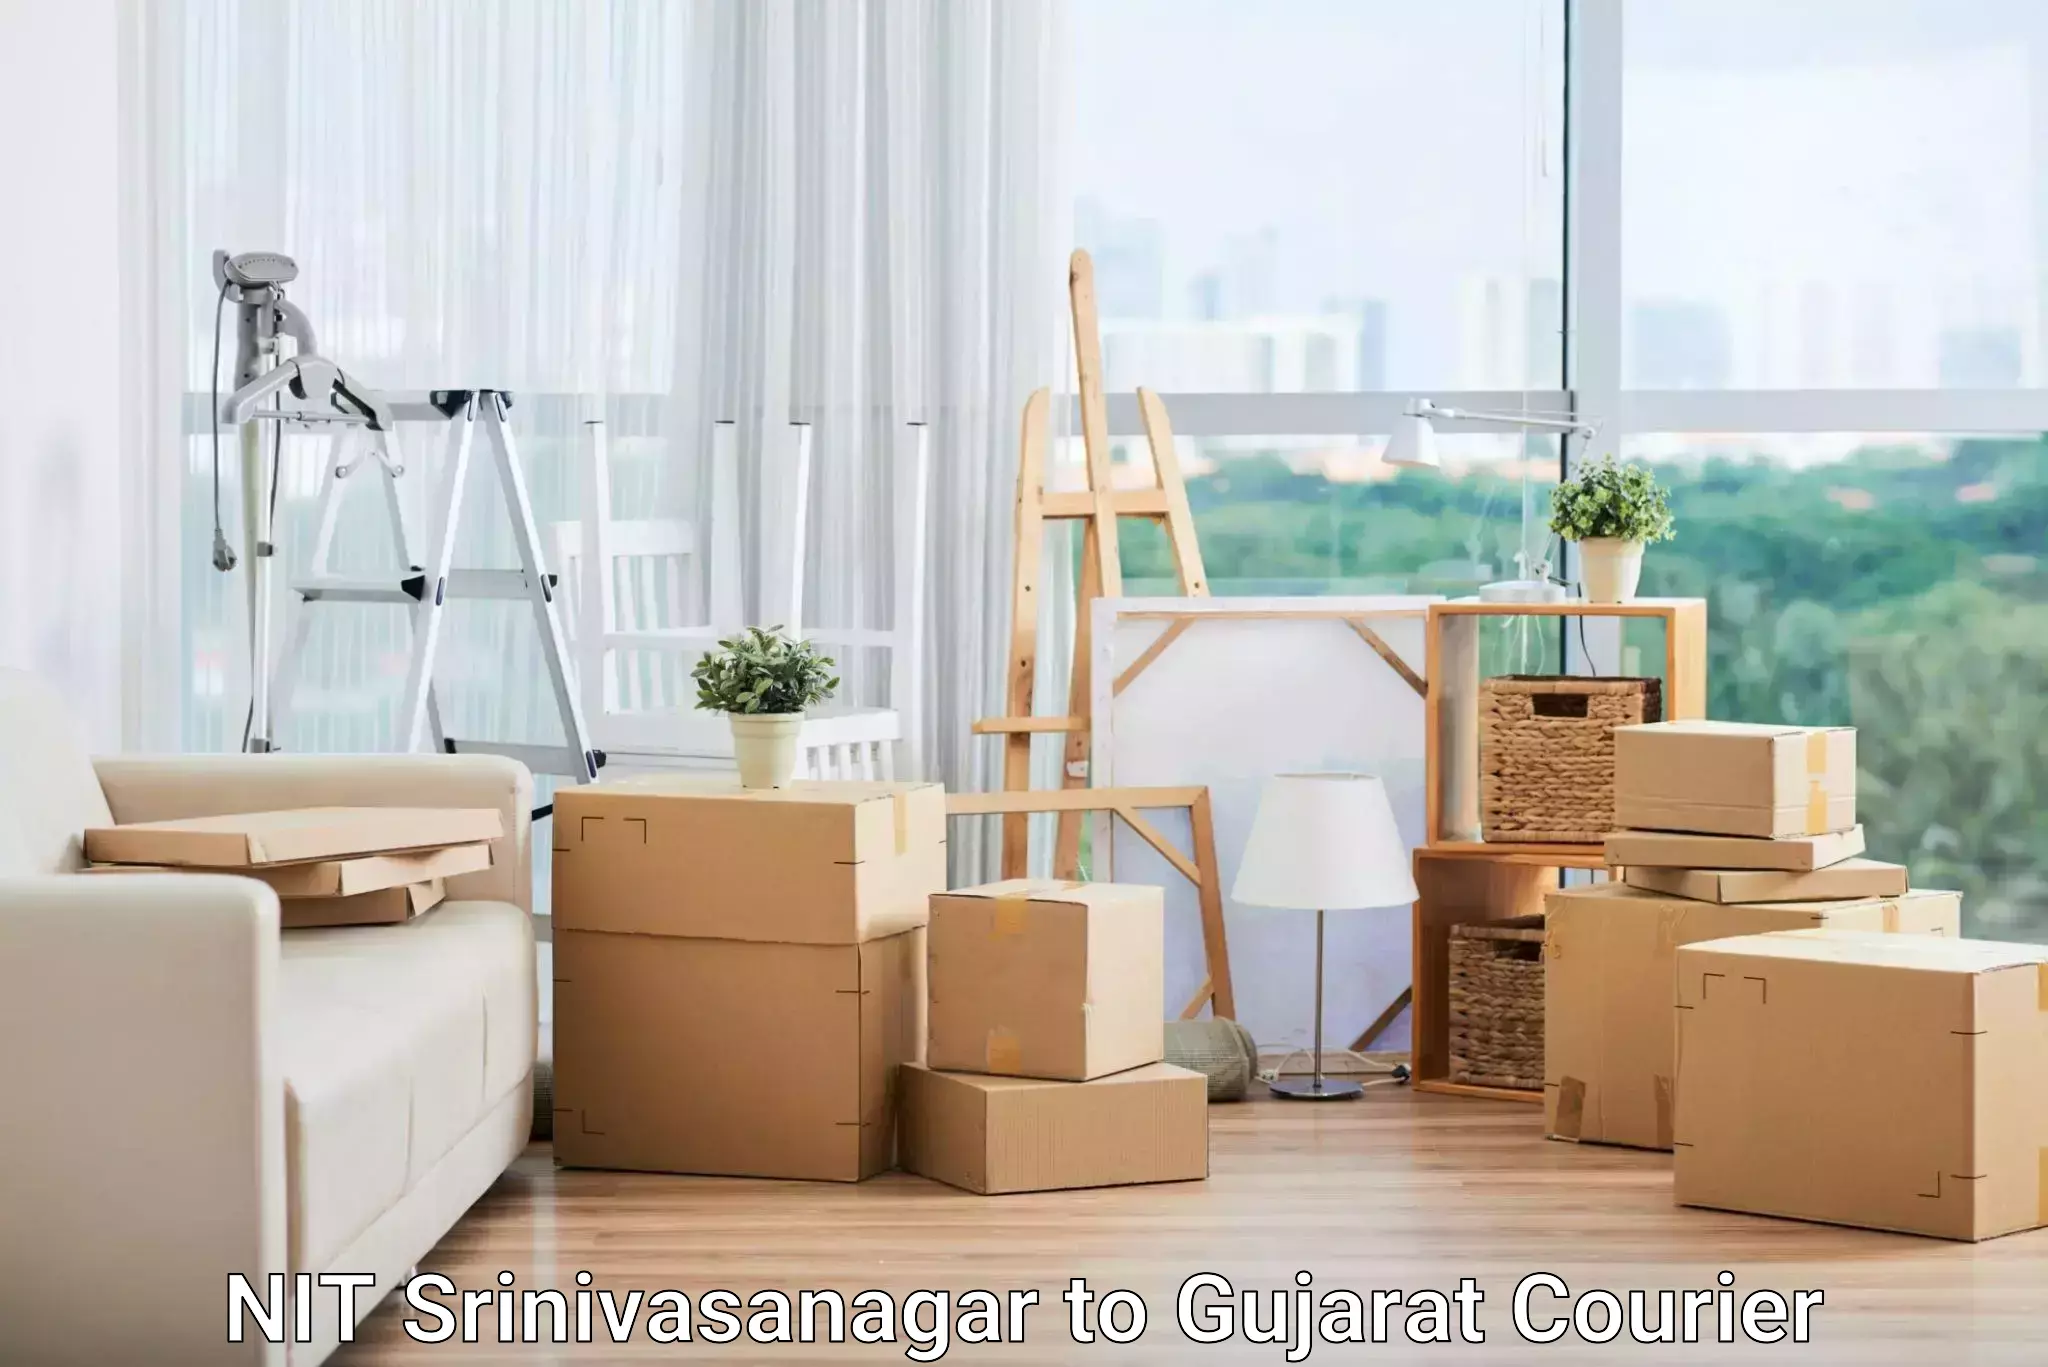 Professional parcel services NIT Srinivasanagar to Gujarat